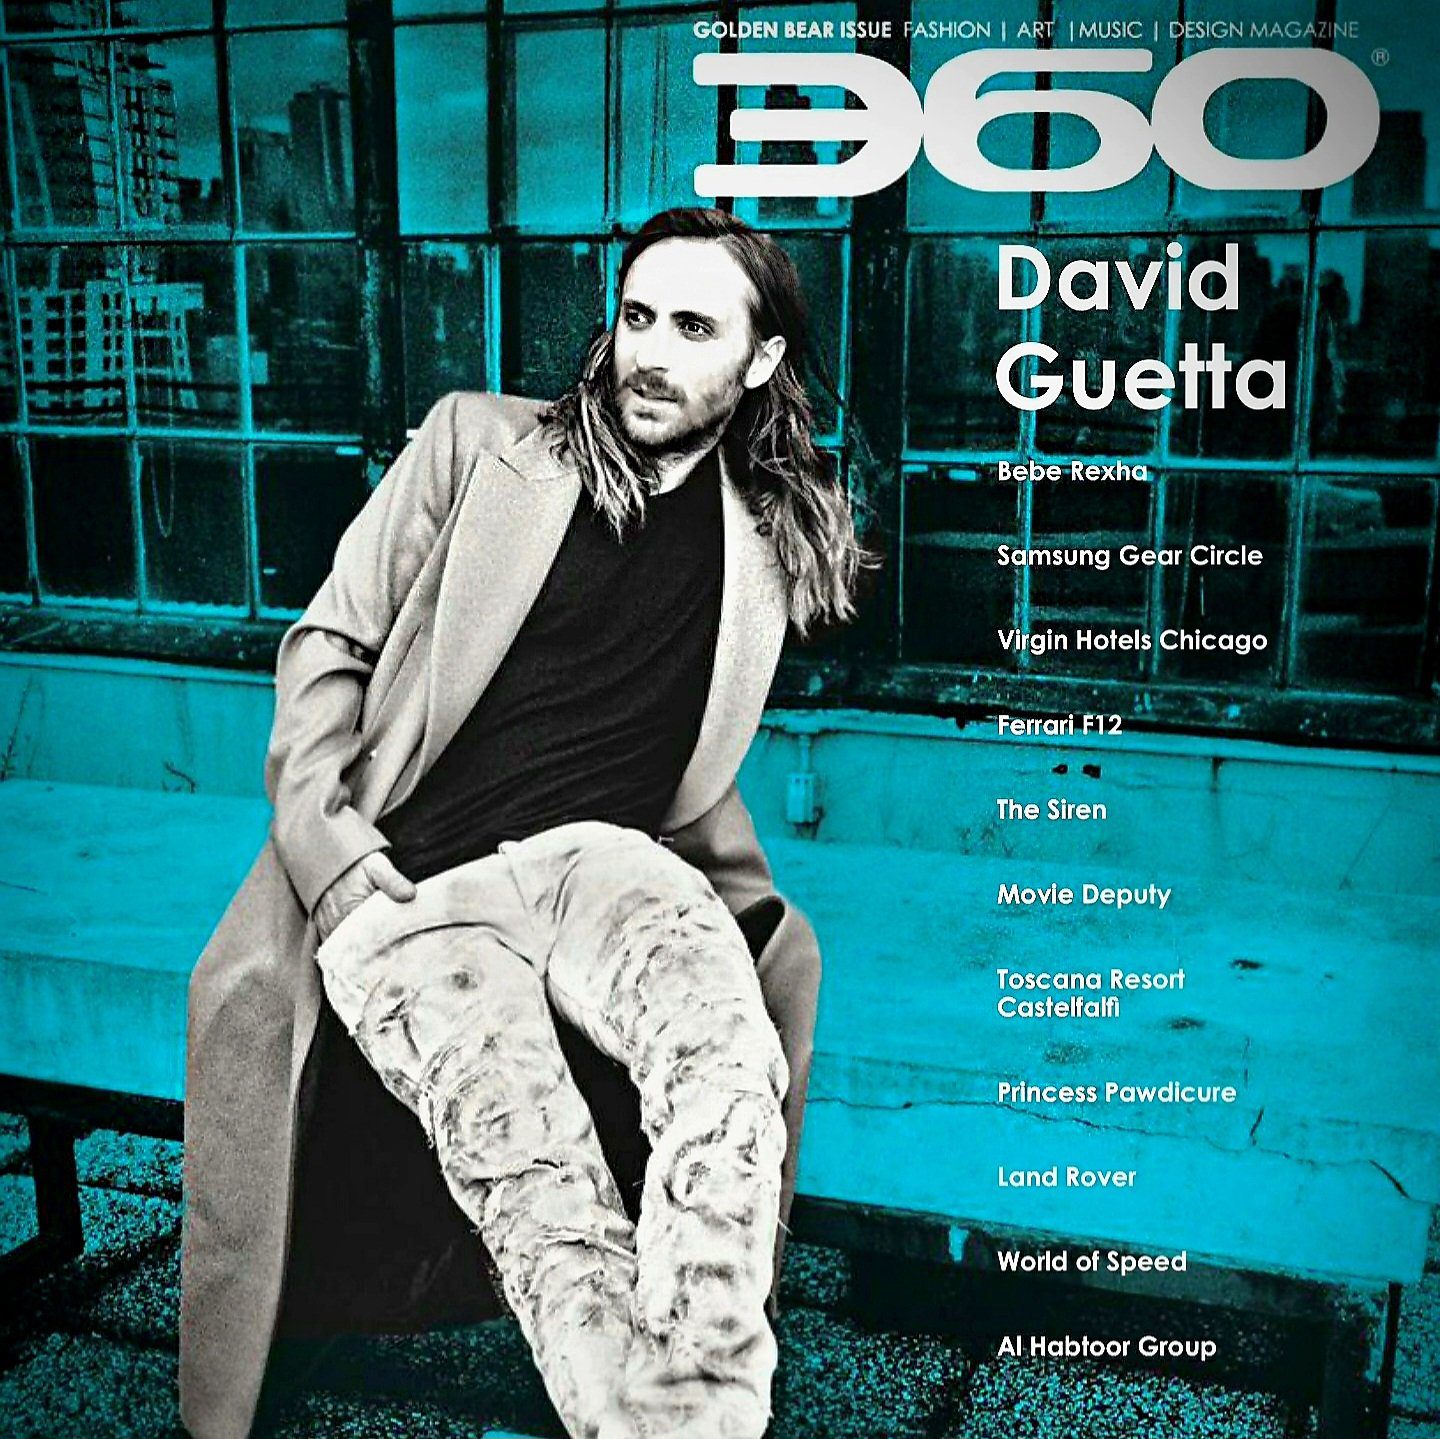 David Guetta apple/spotify podcast for 360 MAGAZINE cover.